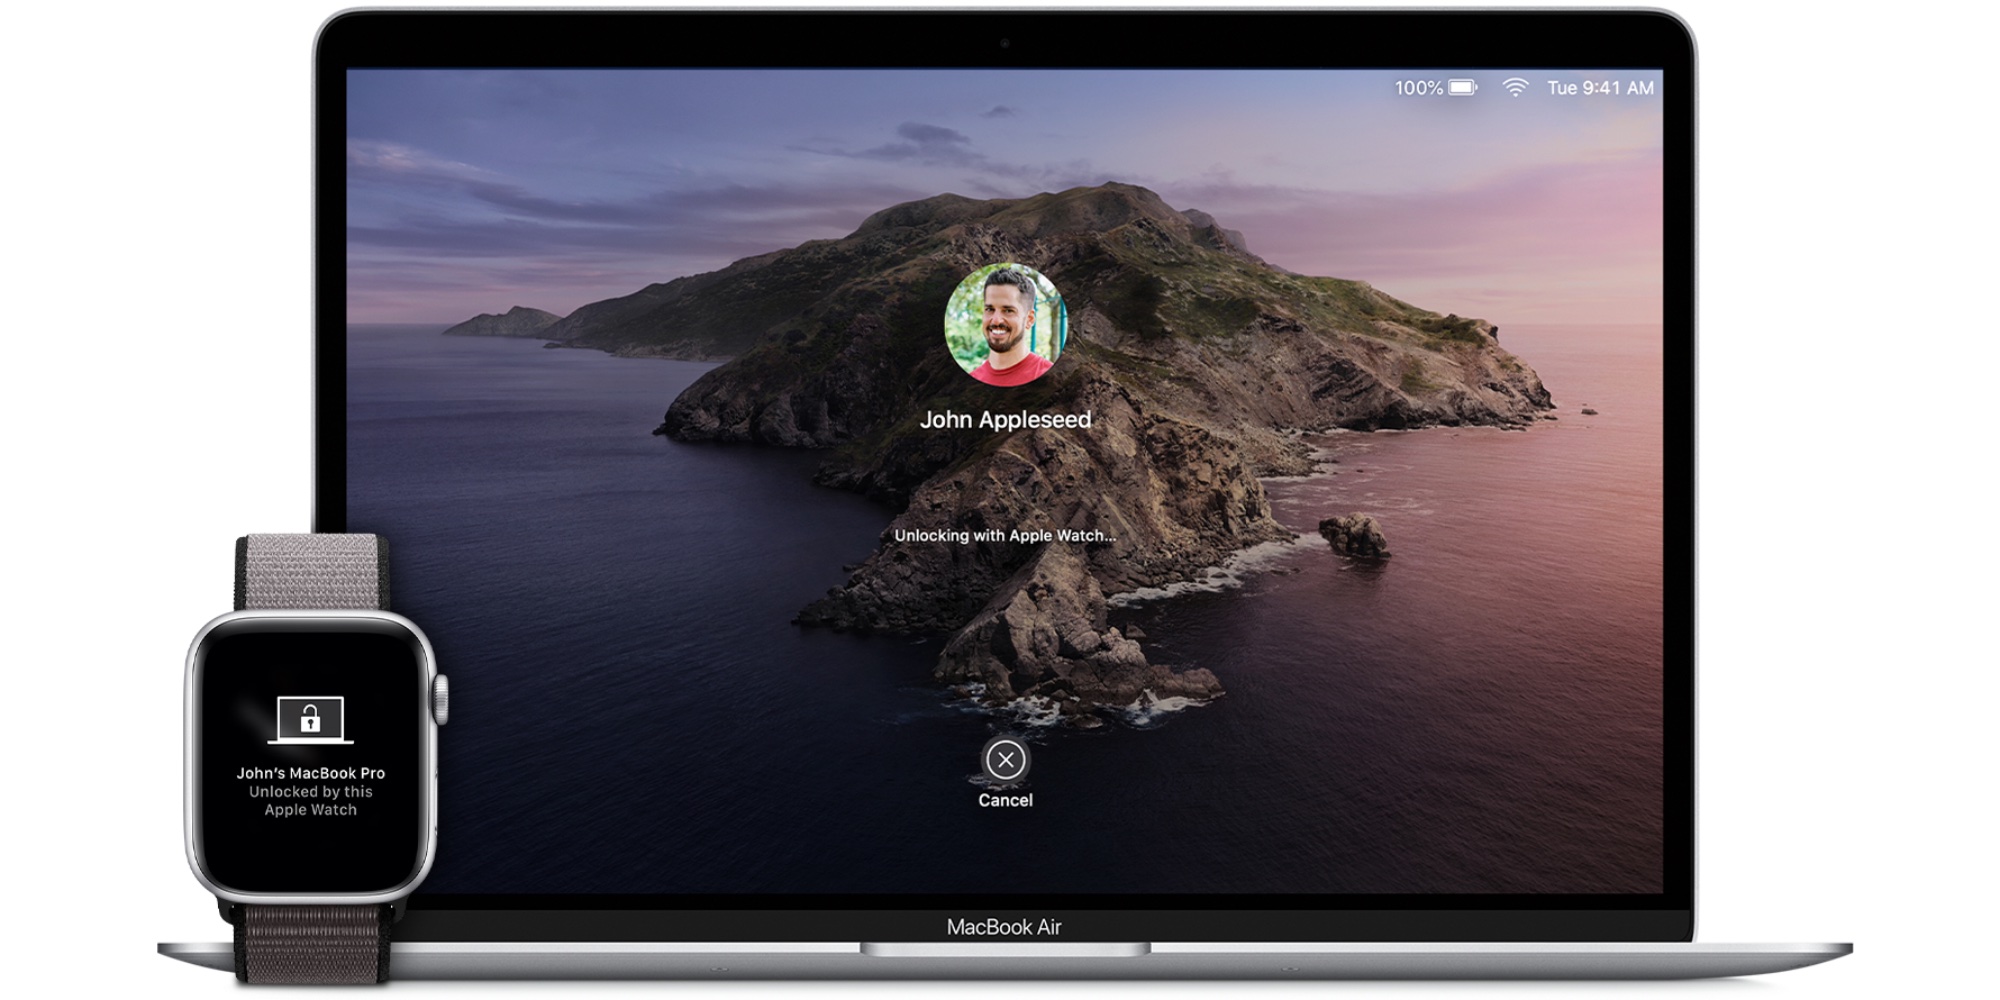 unlock apple macbook pro